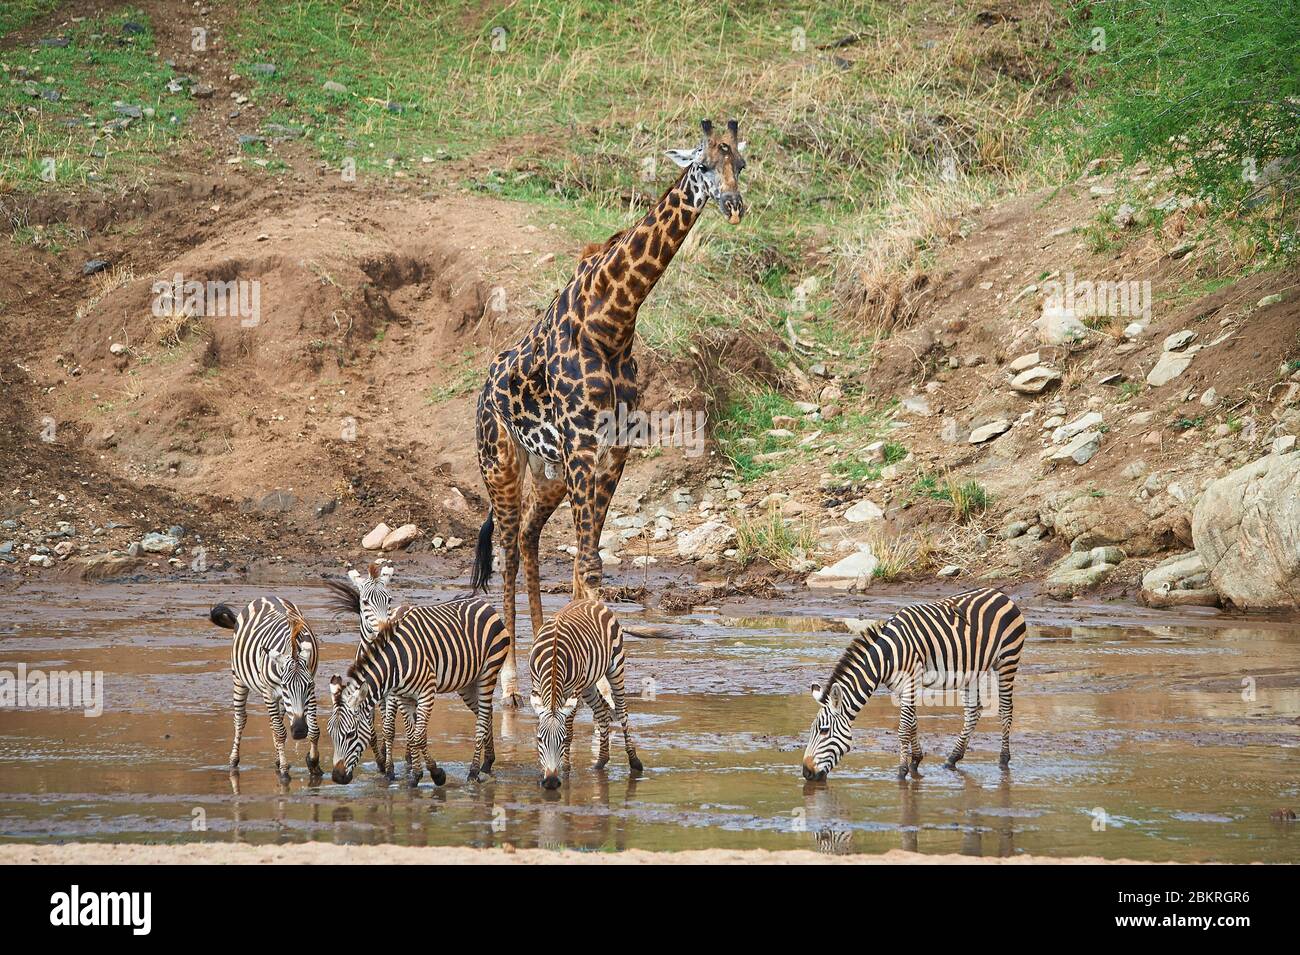 Une grande girafe surplombant des zèbres dans un endroit aquatique de la vallée de Tarangire Banque D'Images